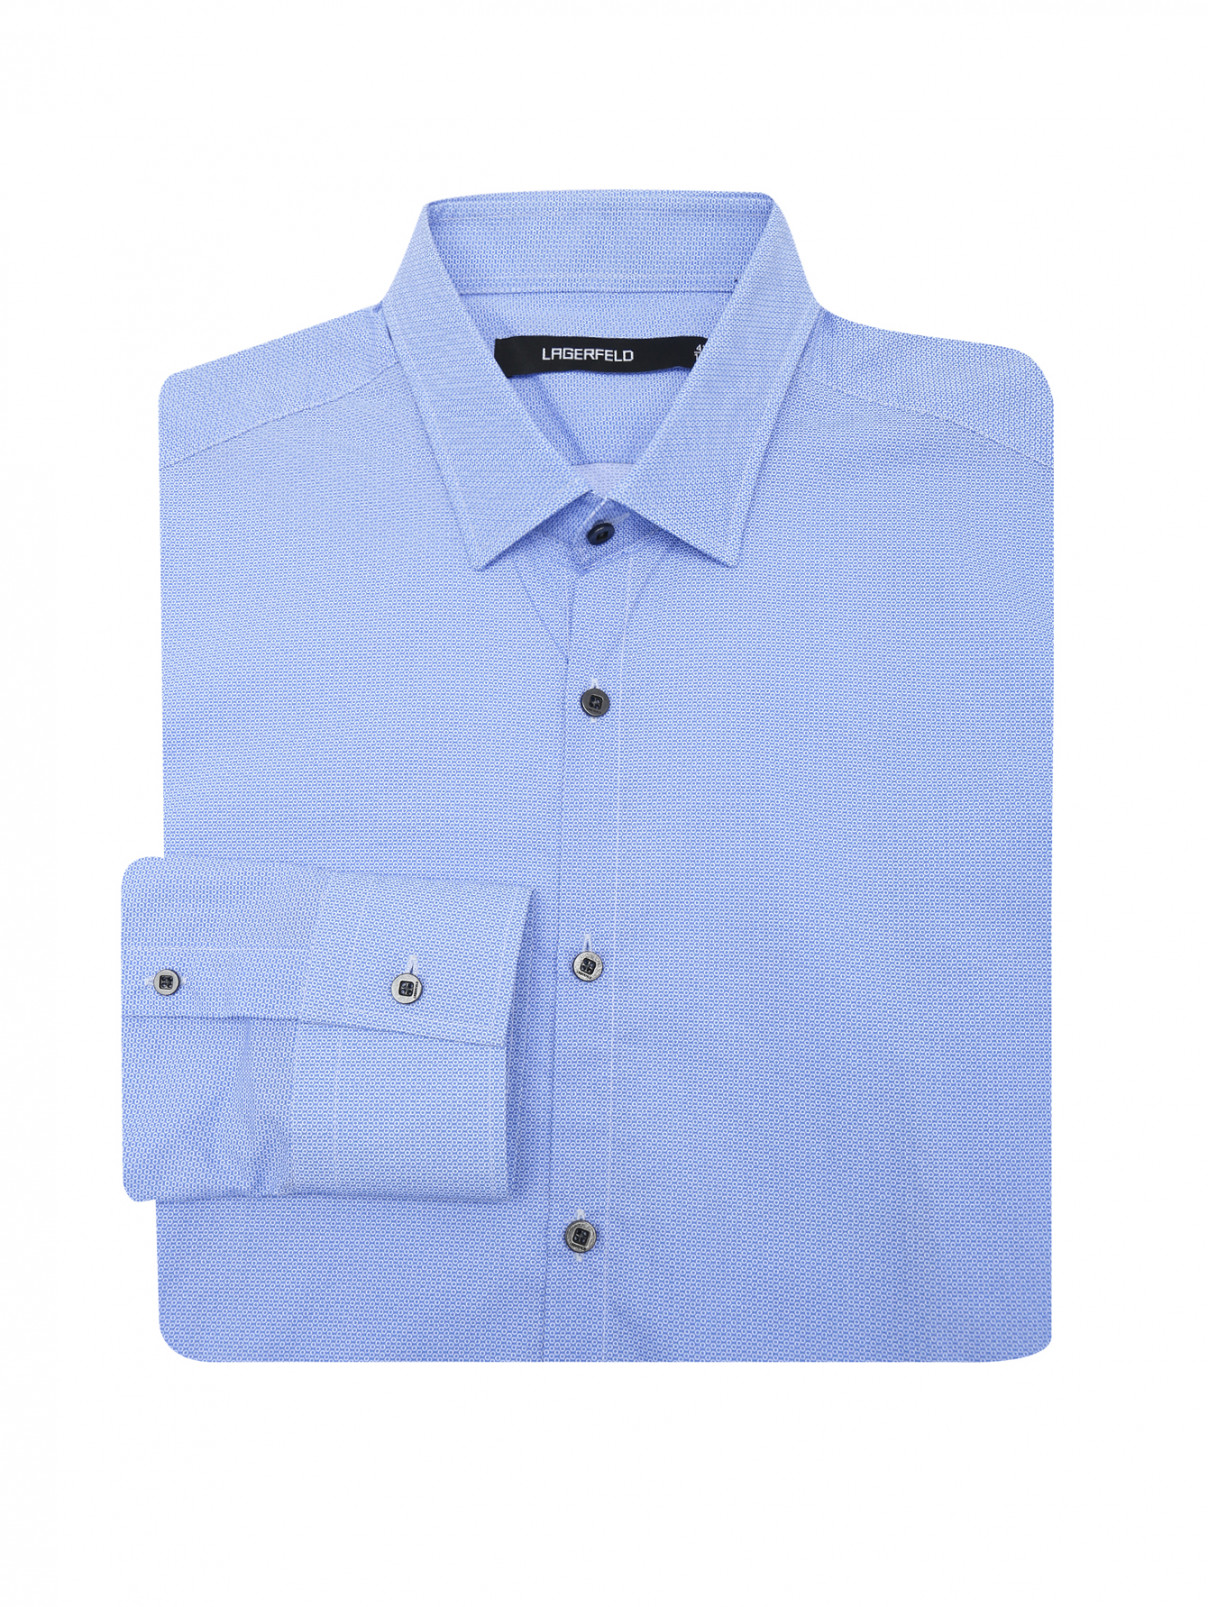 Рубашка из хлопка с узором Lagerfeld  –  Общий вид  – Цвет:  Синий